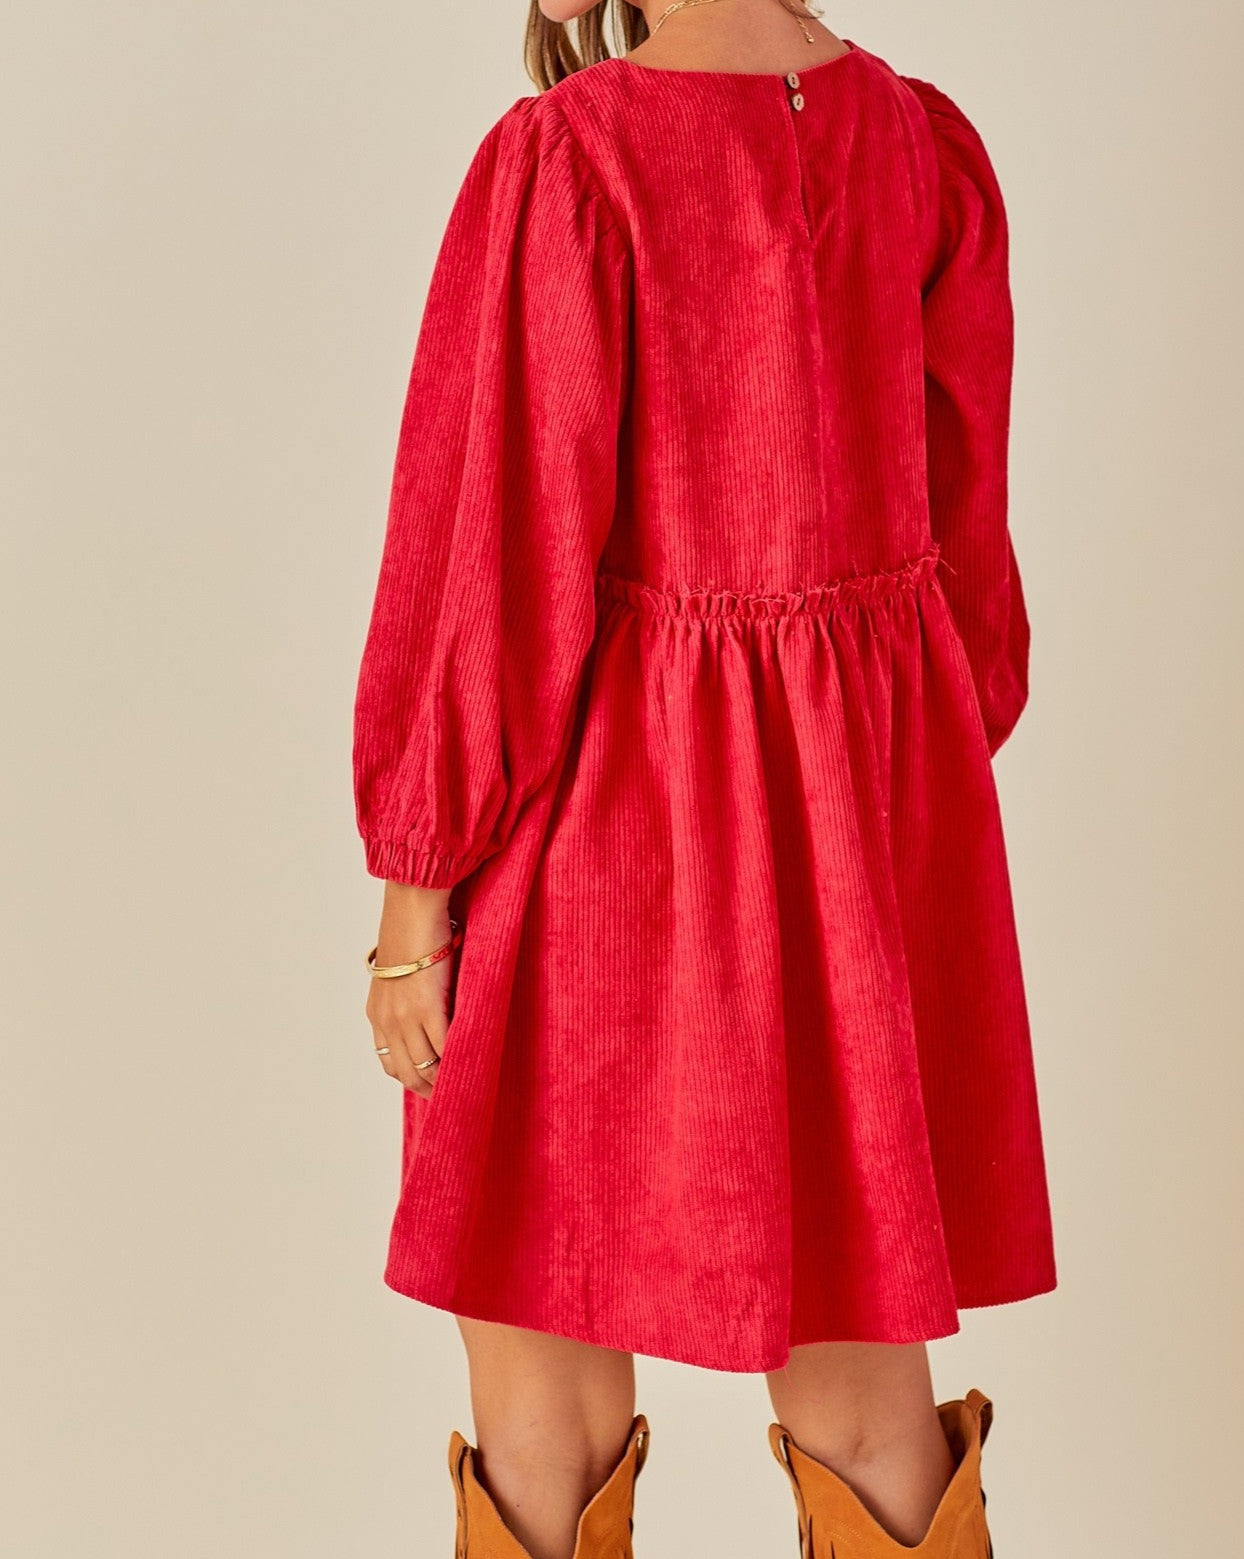 Red Corduroy Dress